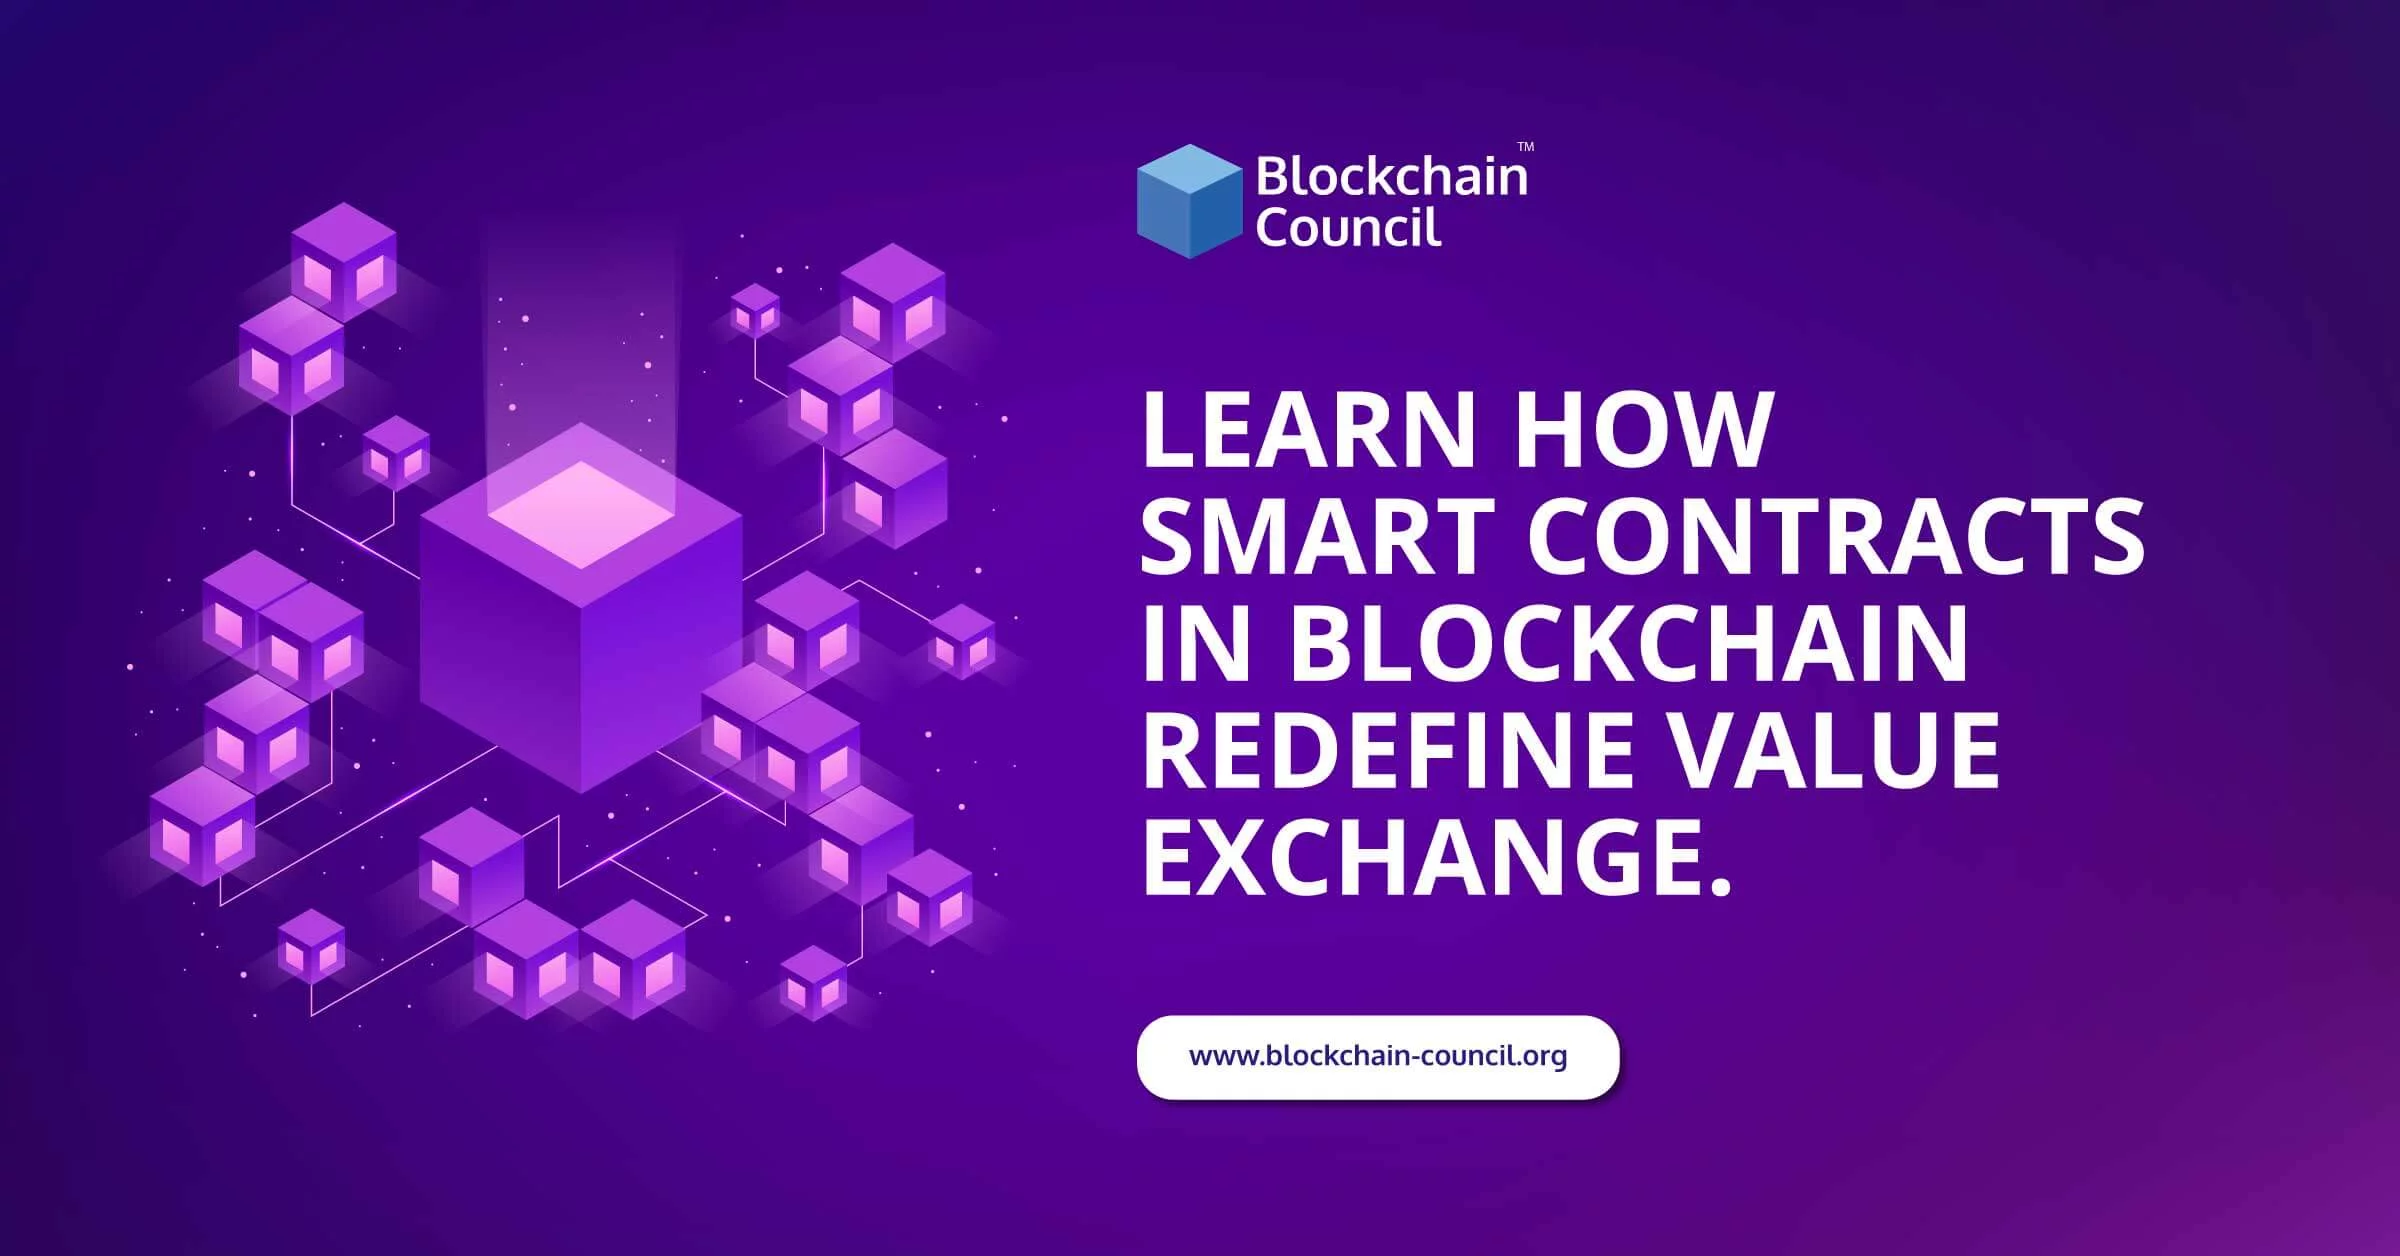 is blockchain better than coinbase